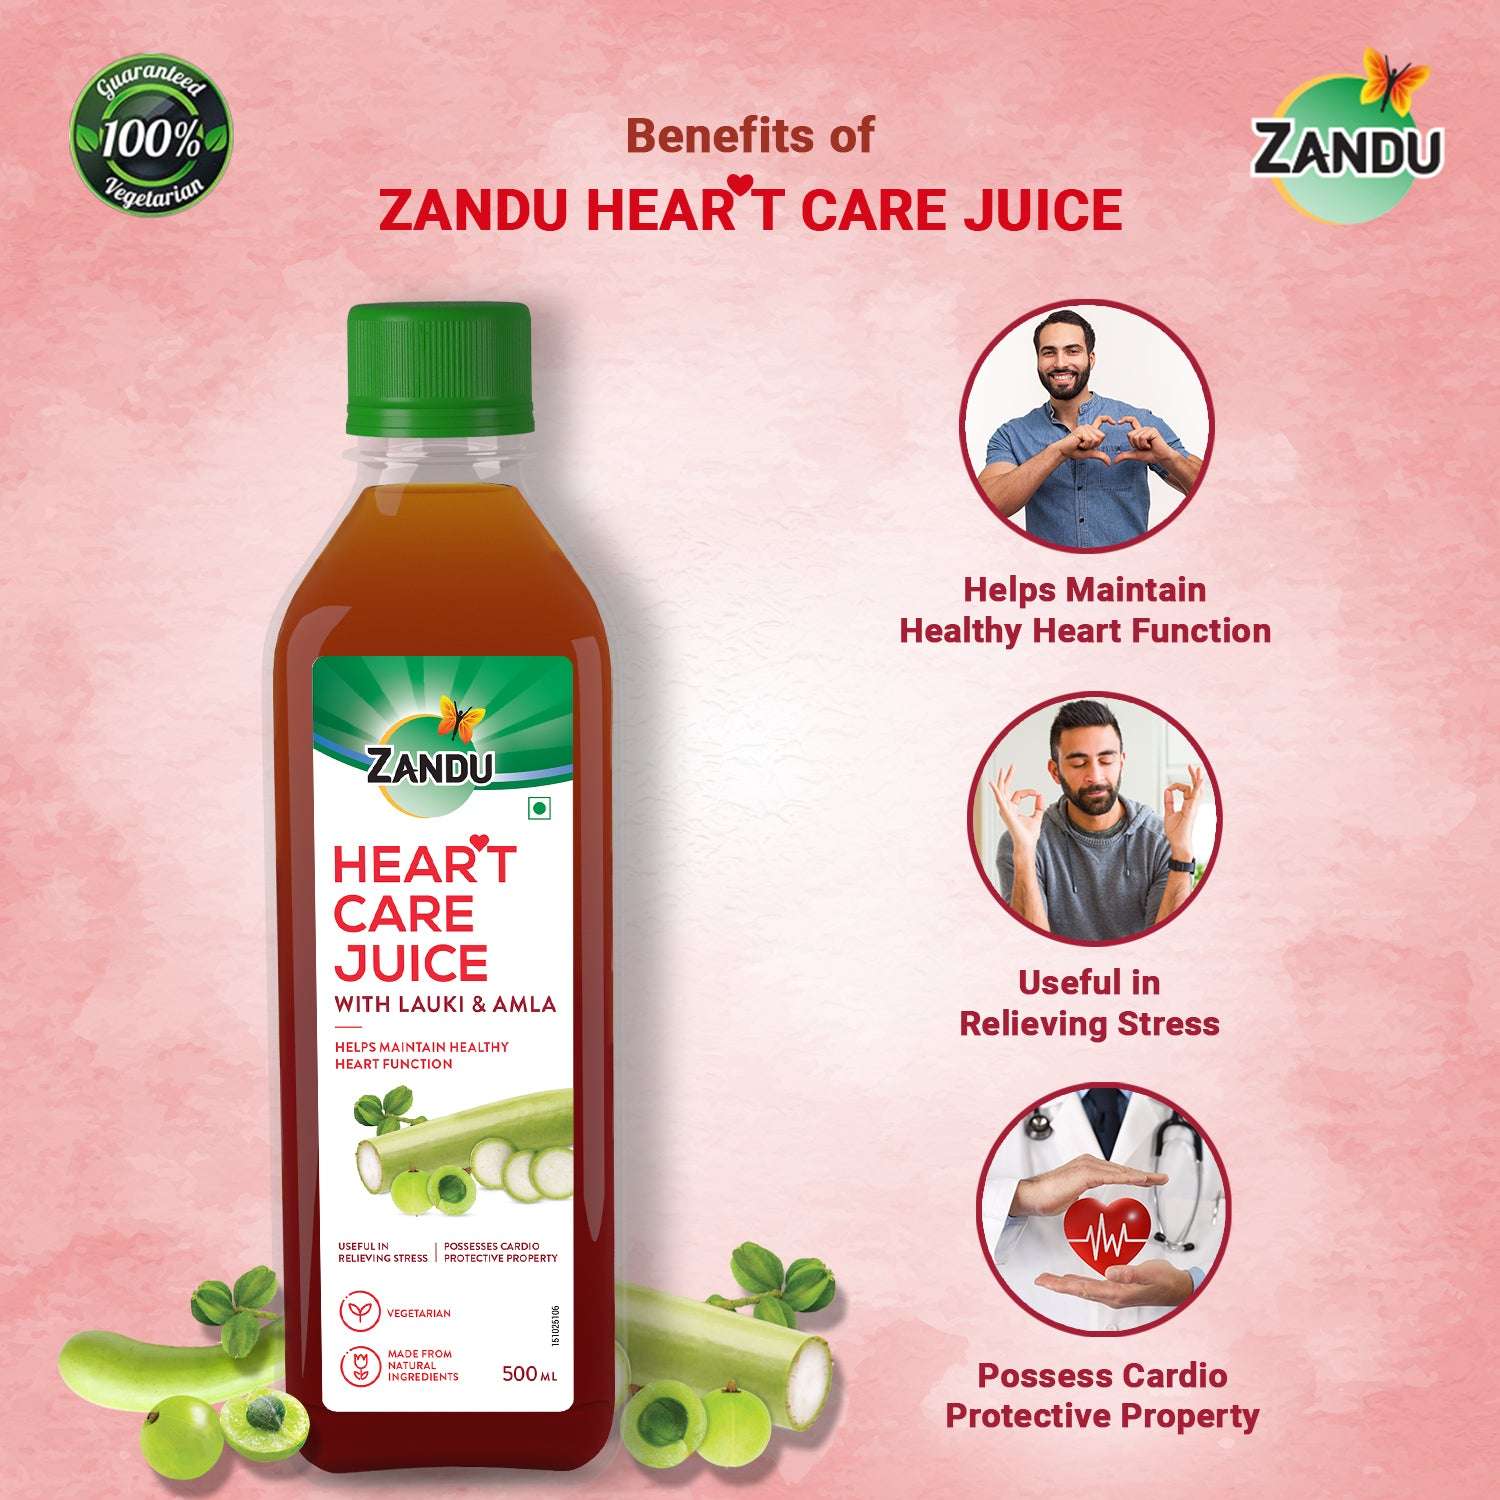 Zandu Heart Juice benefits